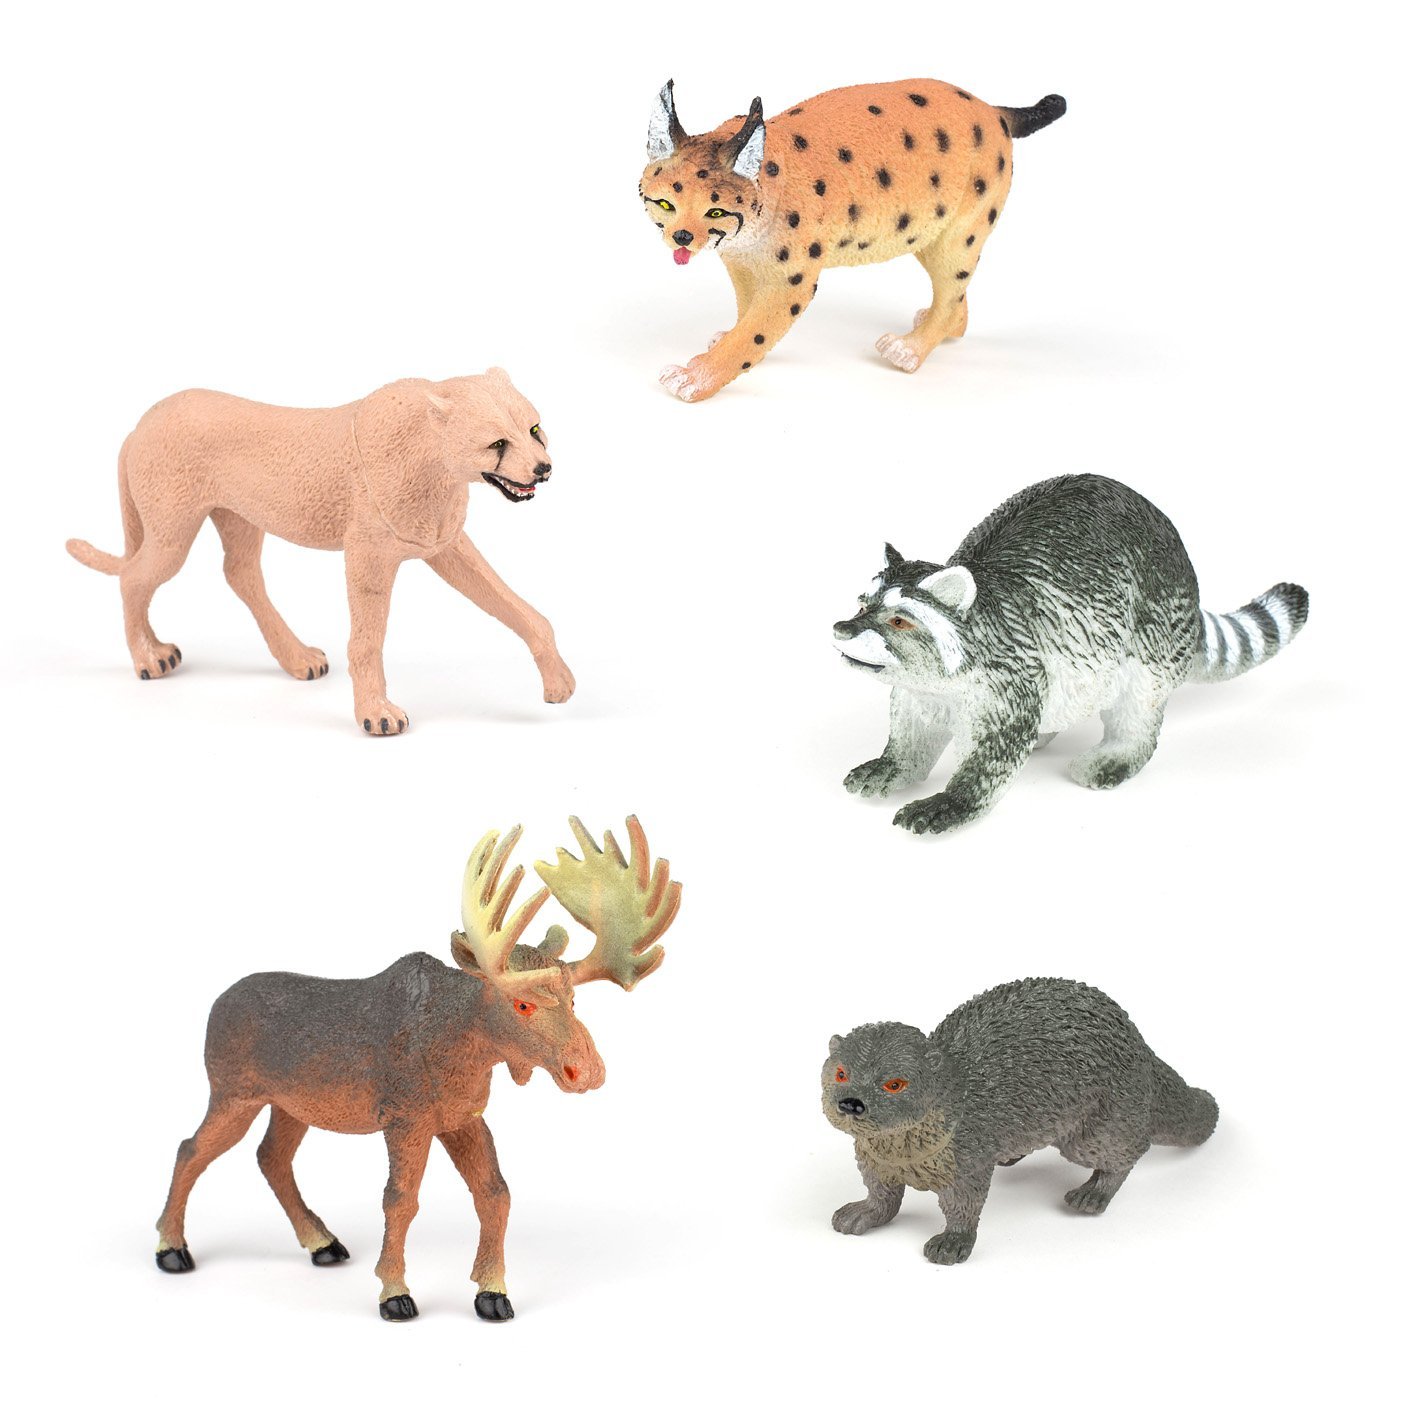 Amazon.com: Set of 5 Realistic Animal Toy Figures 7